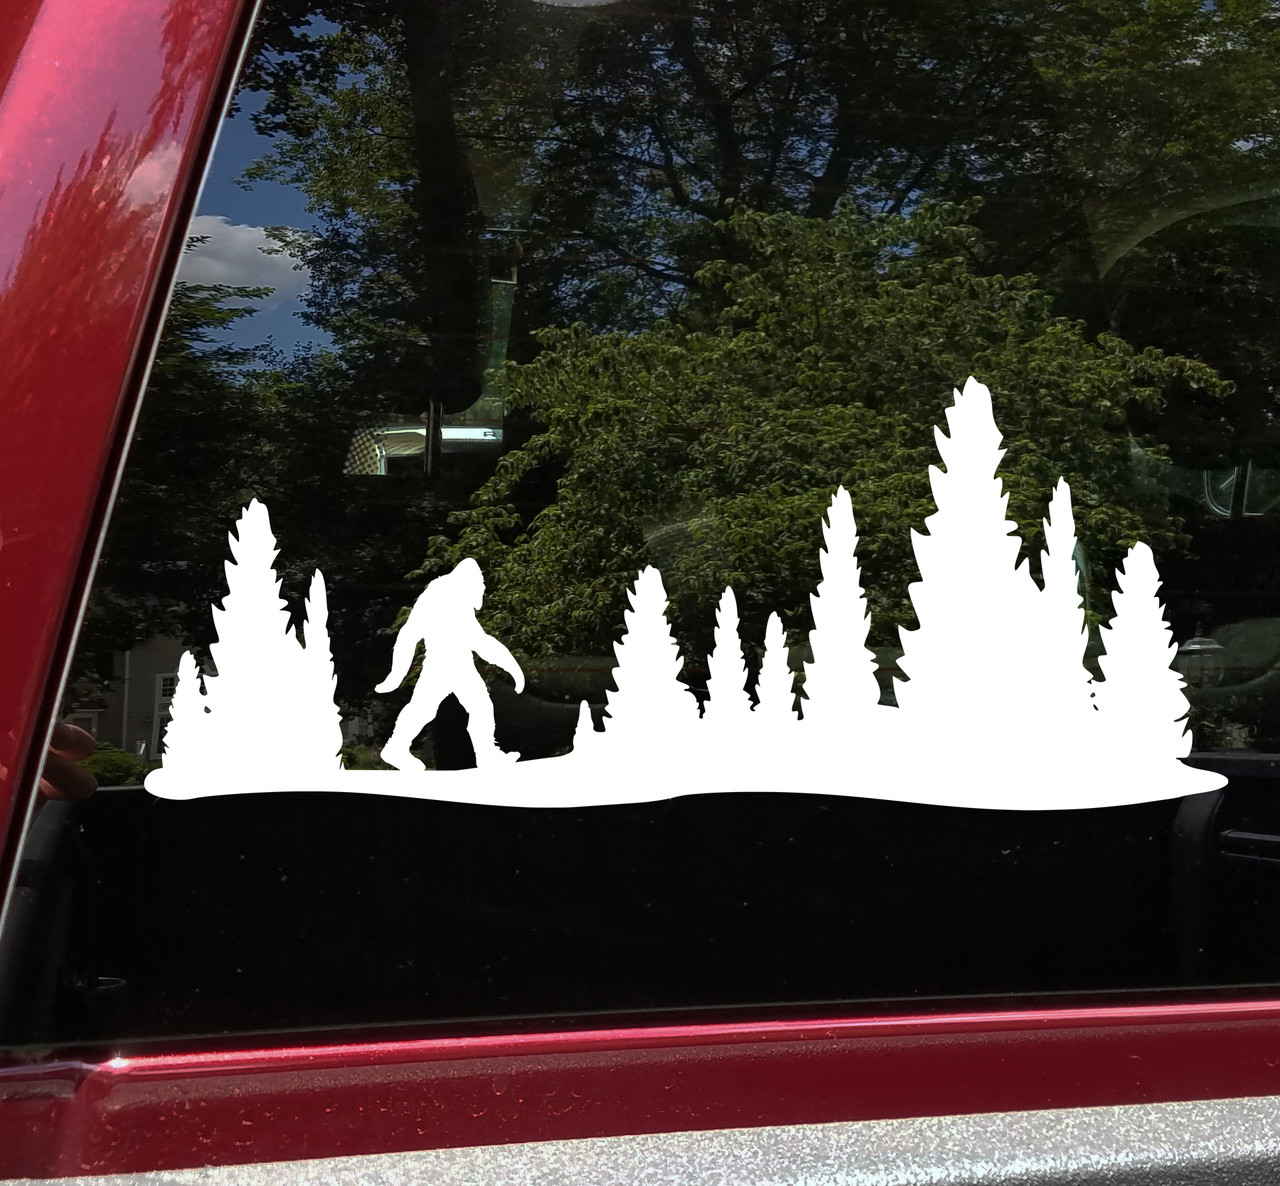 Bigfoot in Treeline V7 Vinyl Decal - RV Motorhome Graphics Pine Trees Forest PNW Sasquatch - Die Cut Sticker